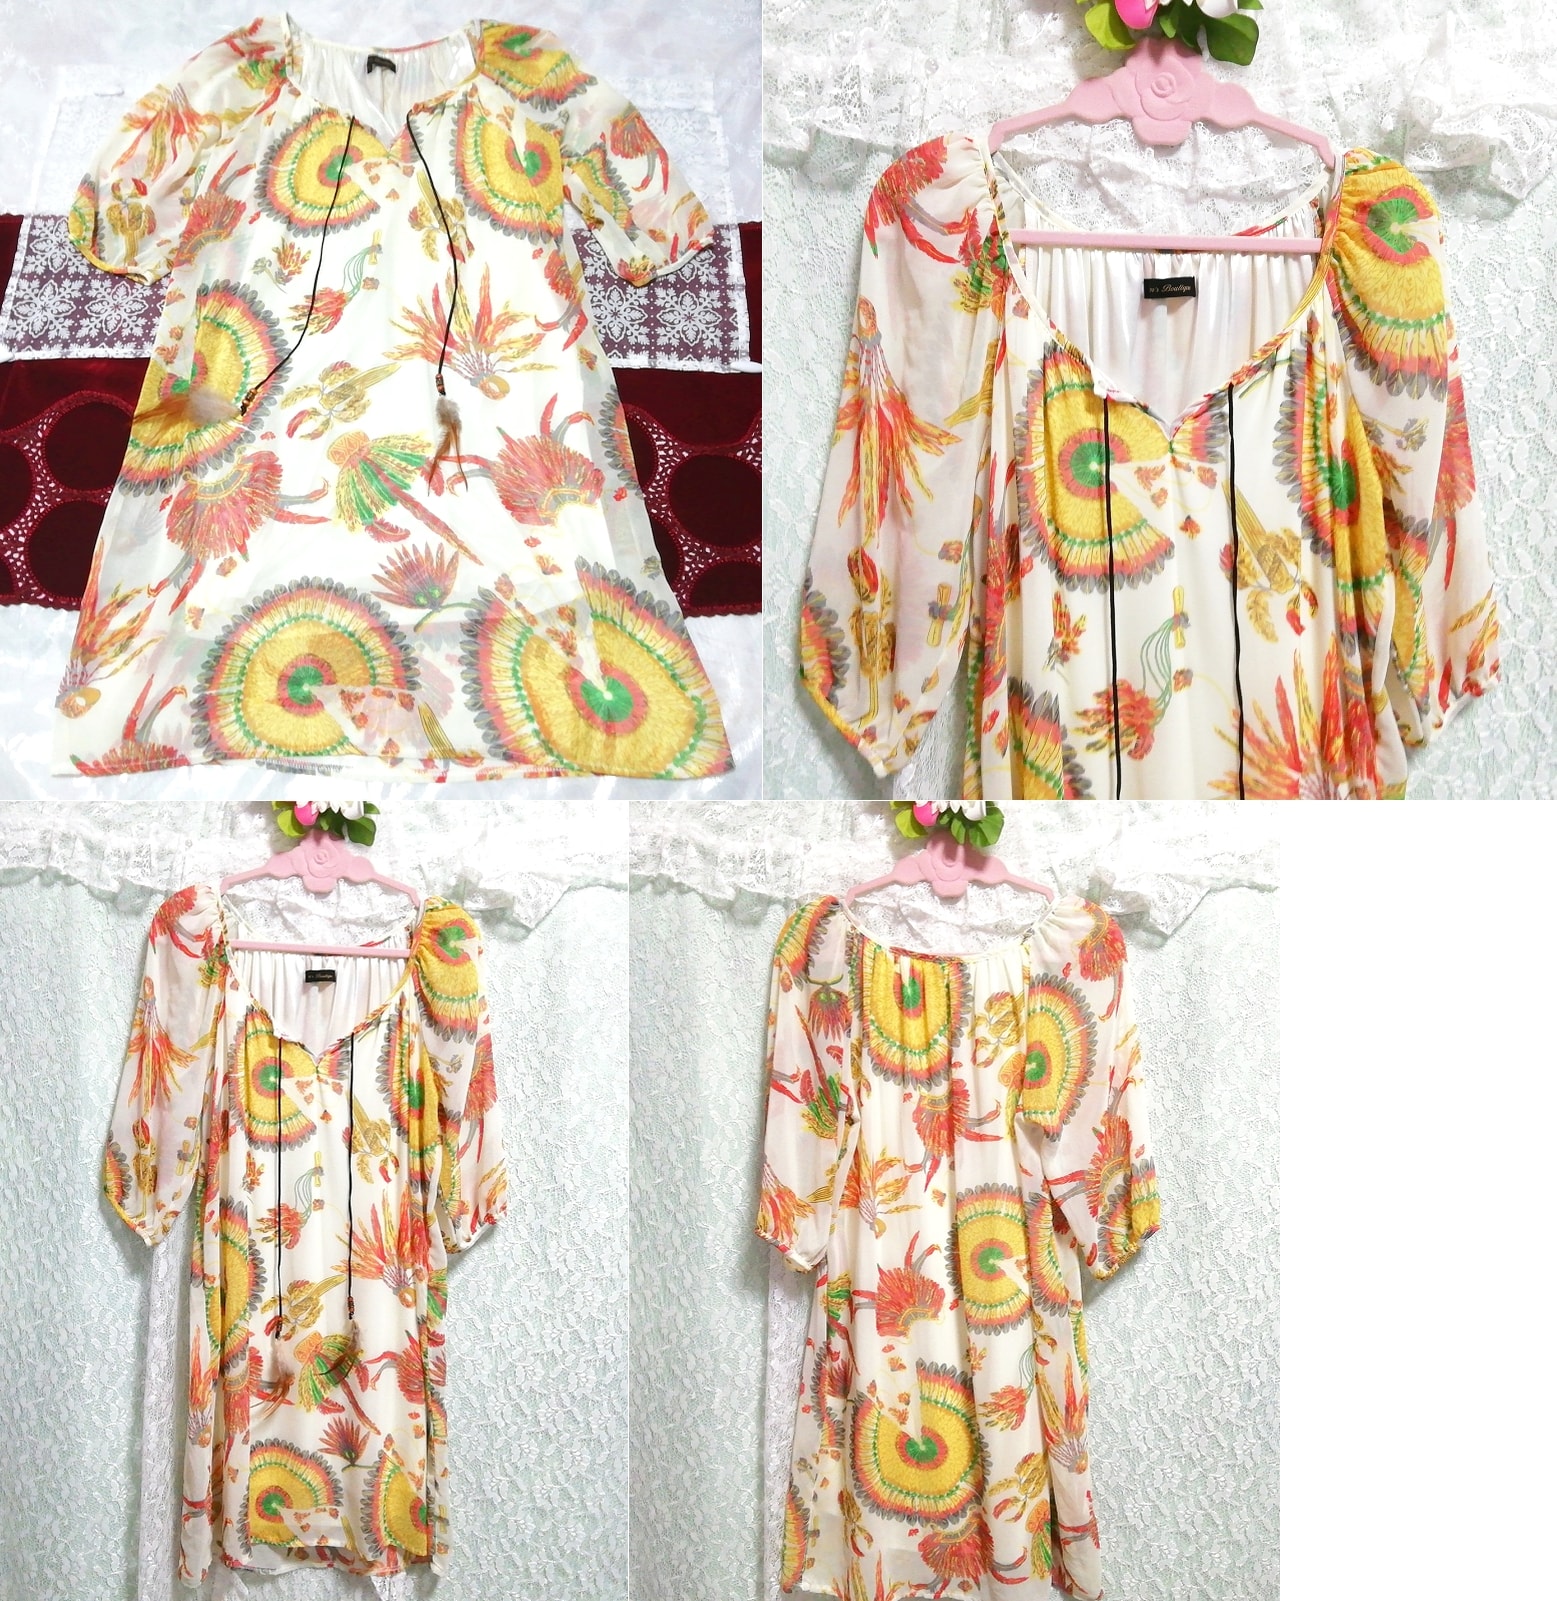 Camisón tipo negligee tipo túnica de gasa con cordón de plumas y estampado de girasol amarillo, sayo, manga larga, talla m